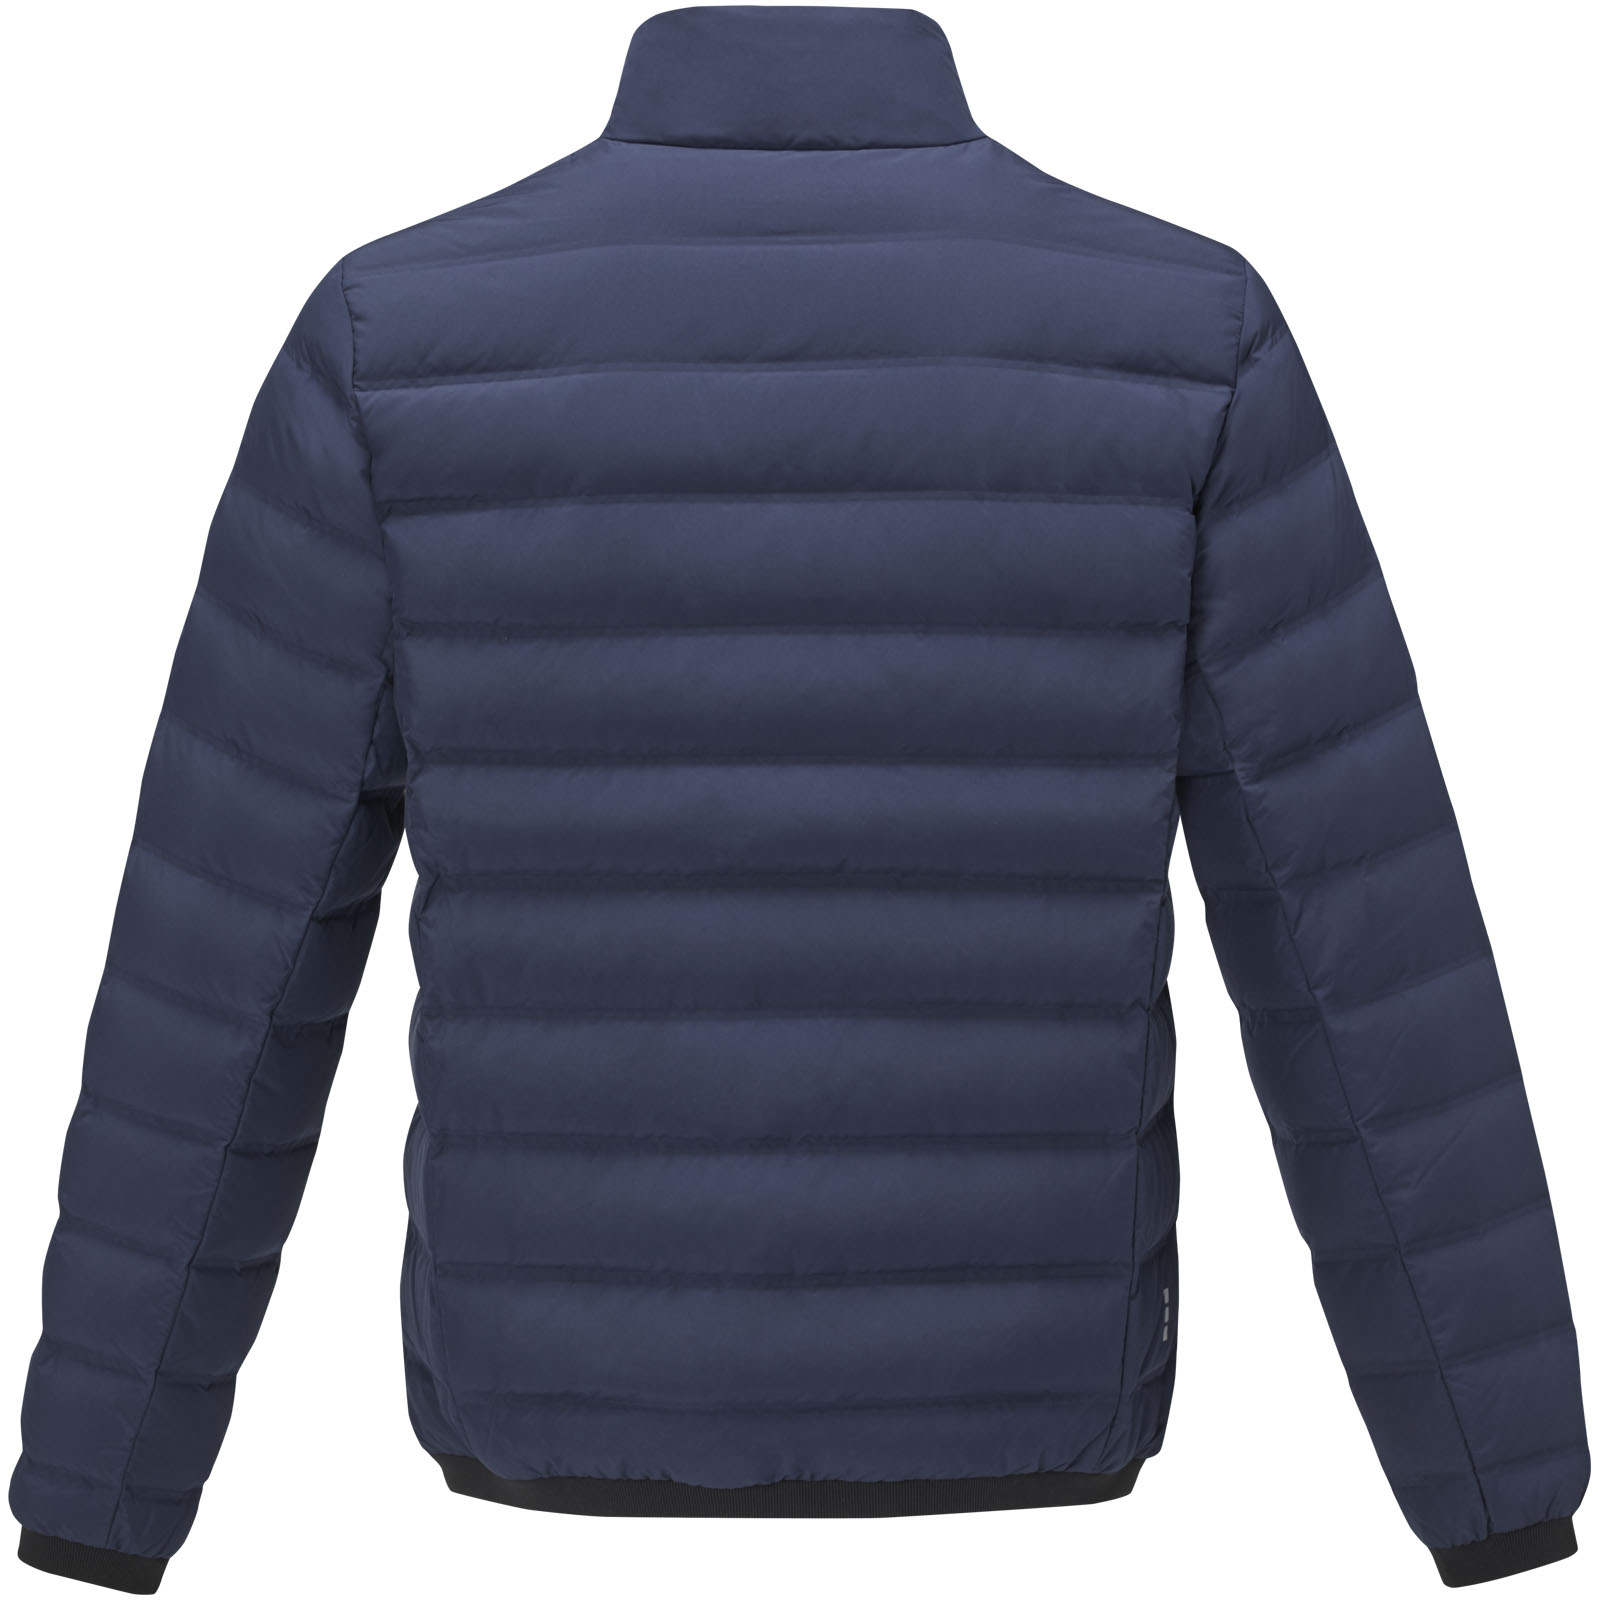 Advertising Jackets - Macin men's insulated down jacket - 2